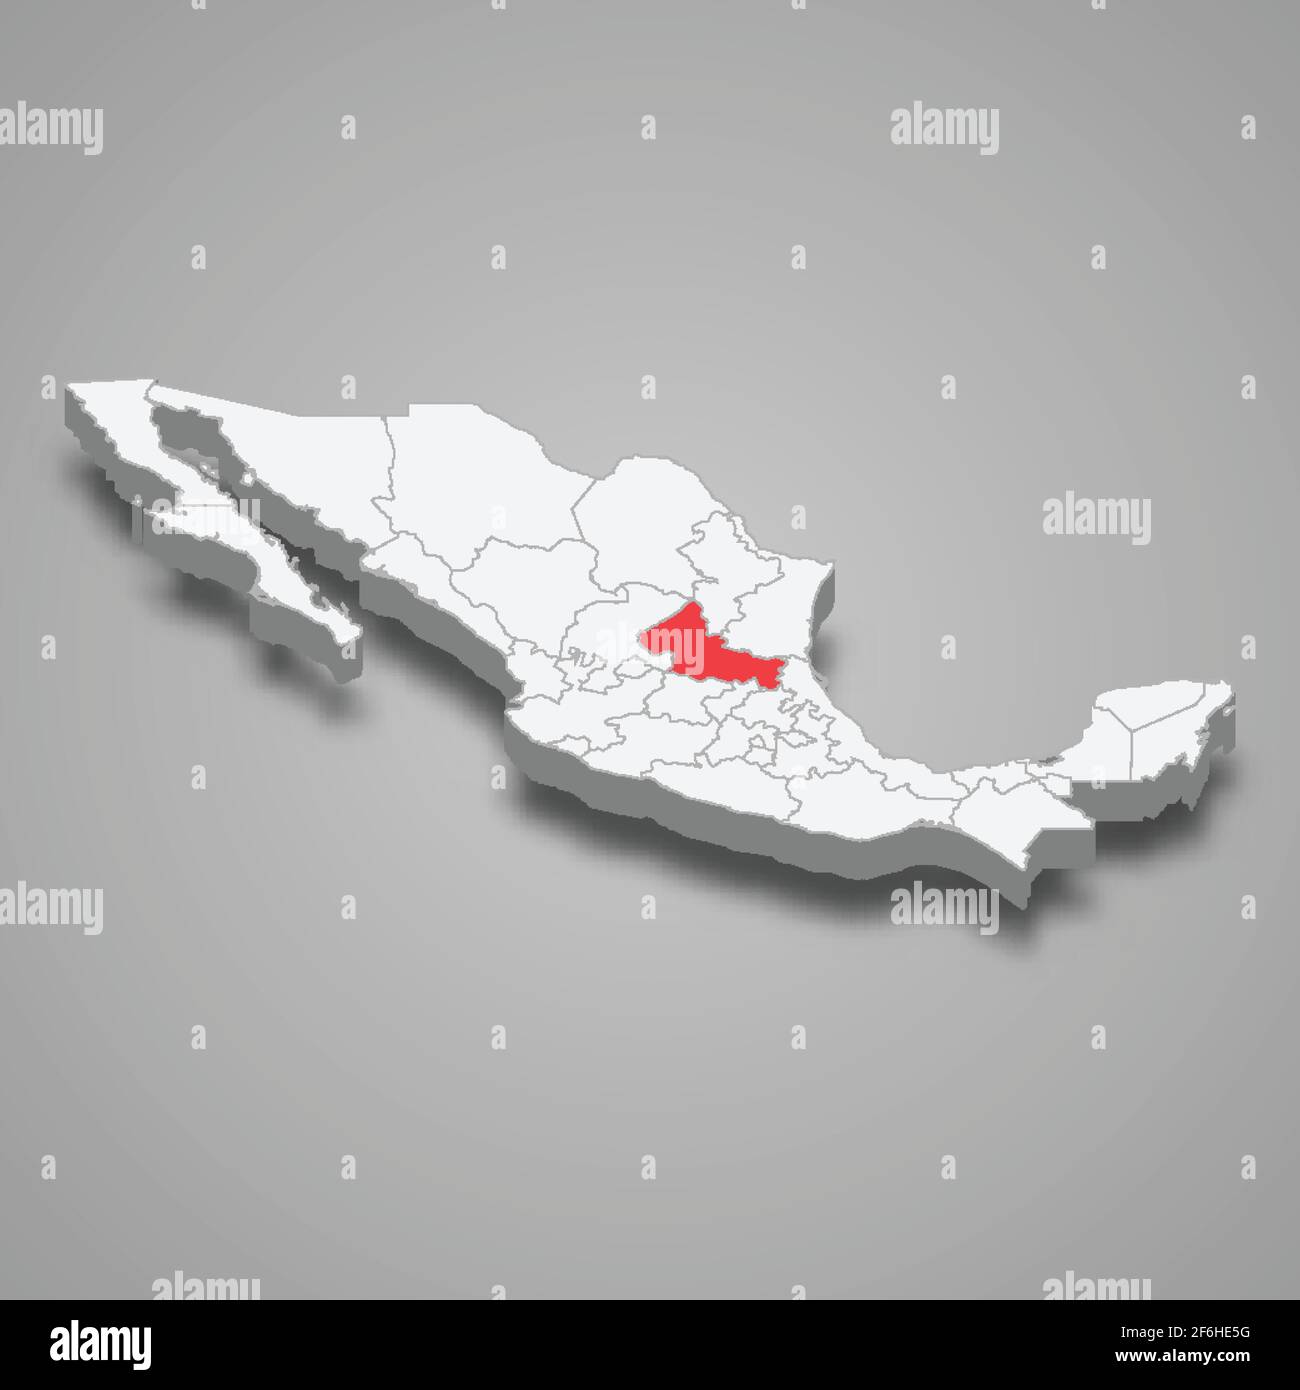 San Luis Potosi region location within Mexico 3d isometric map Stock Vector